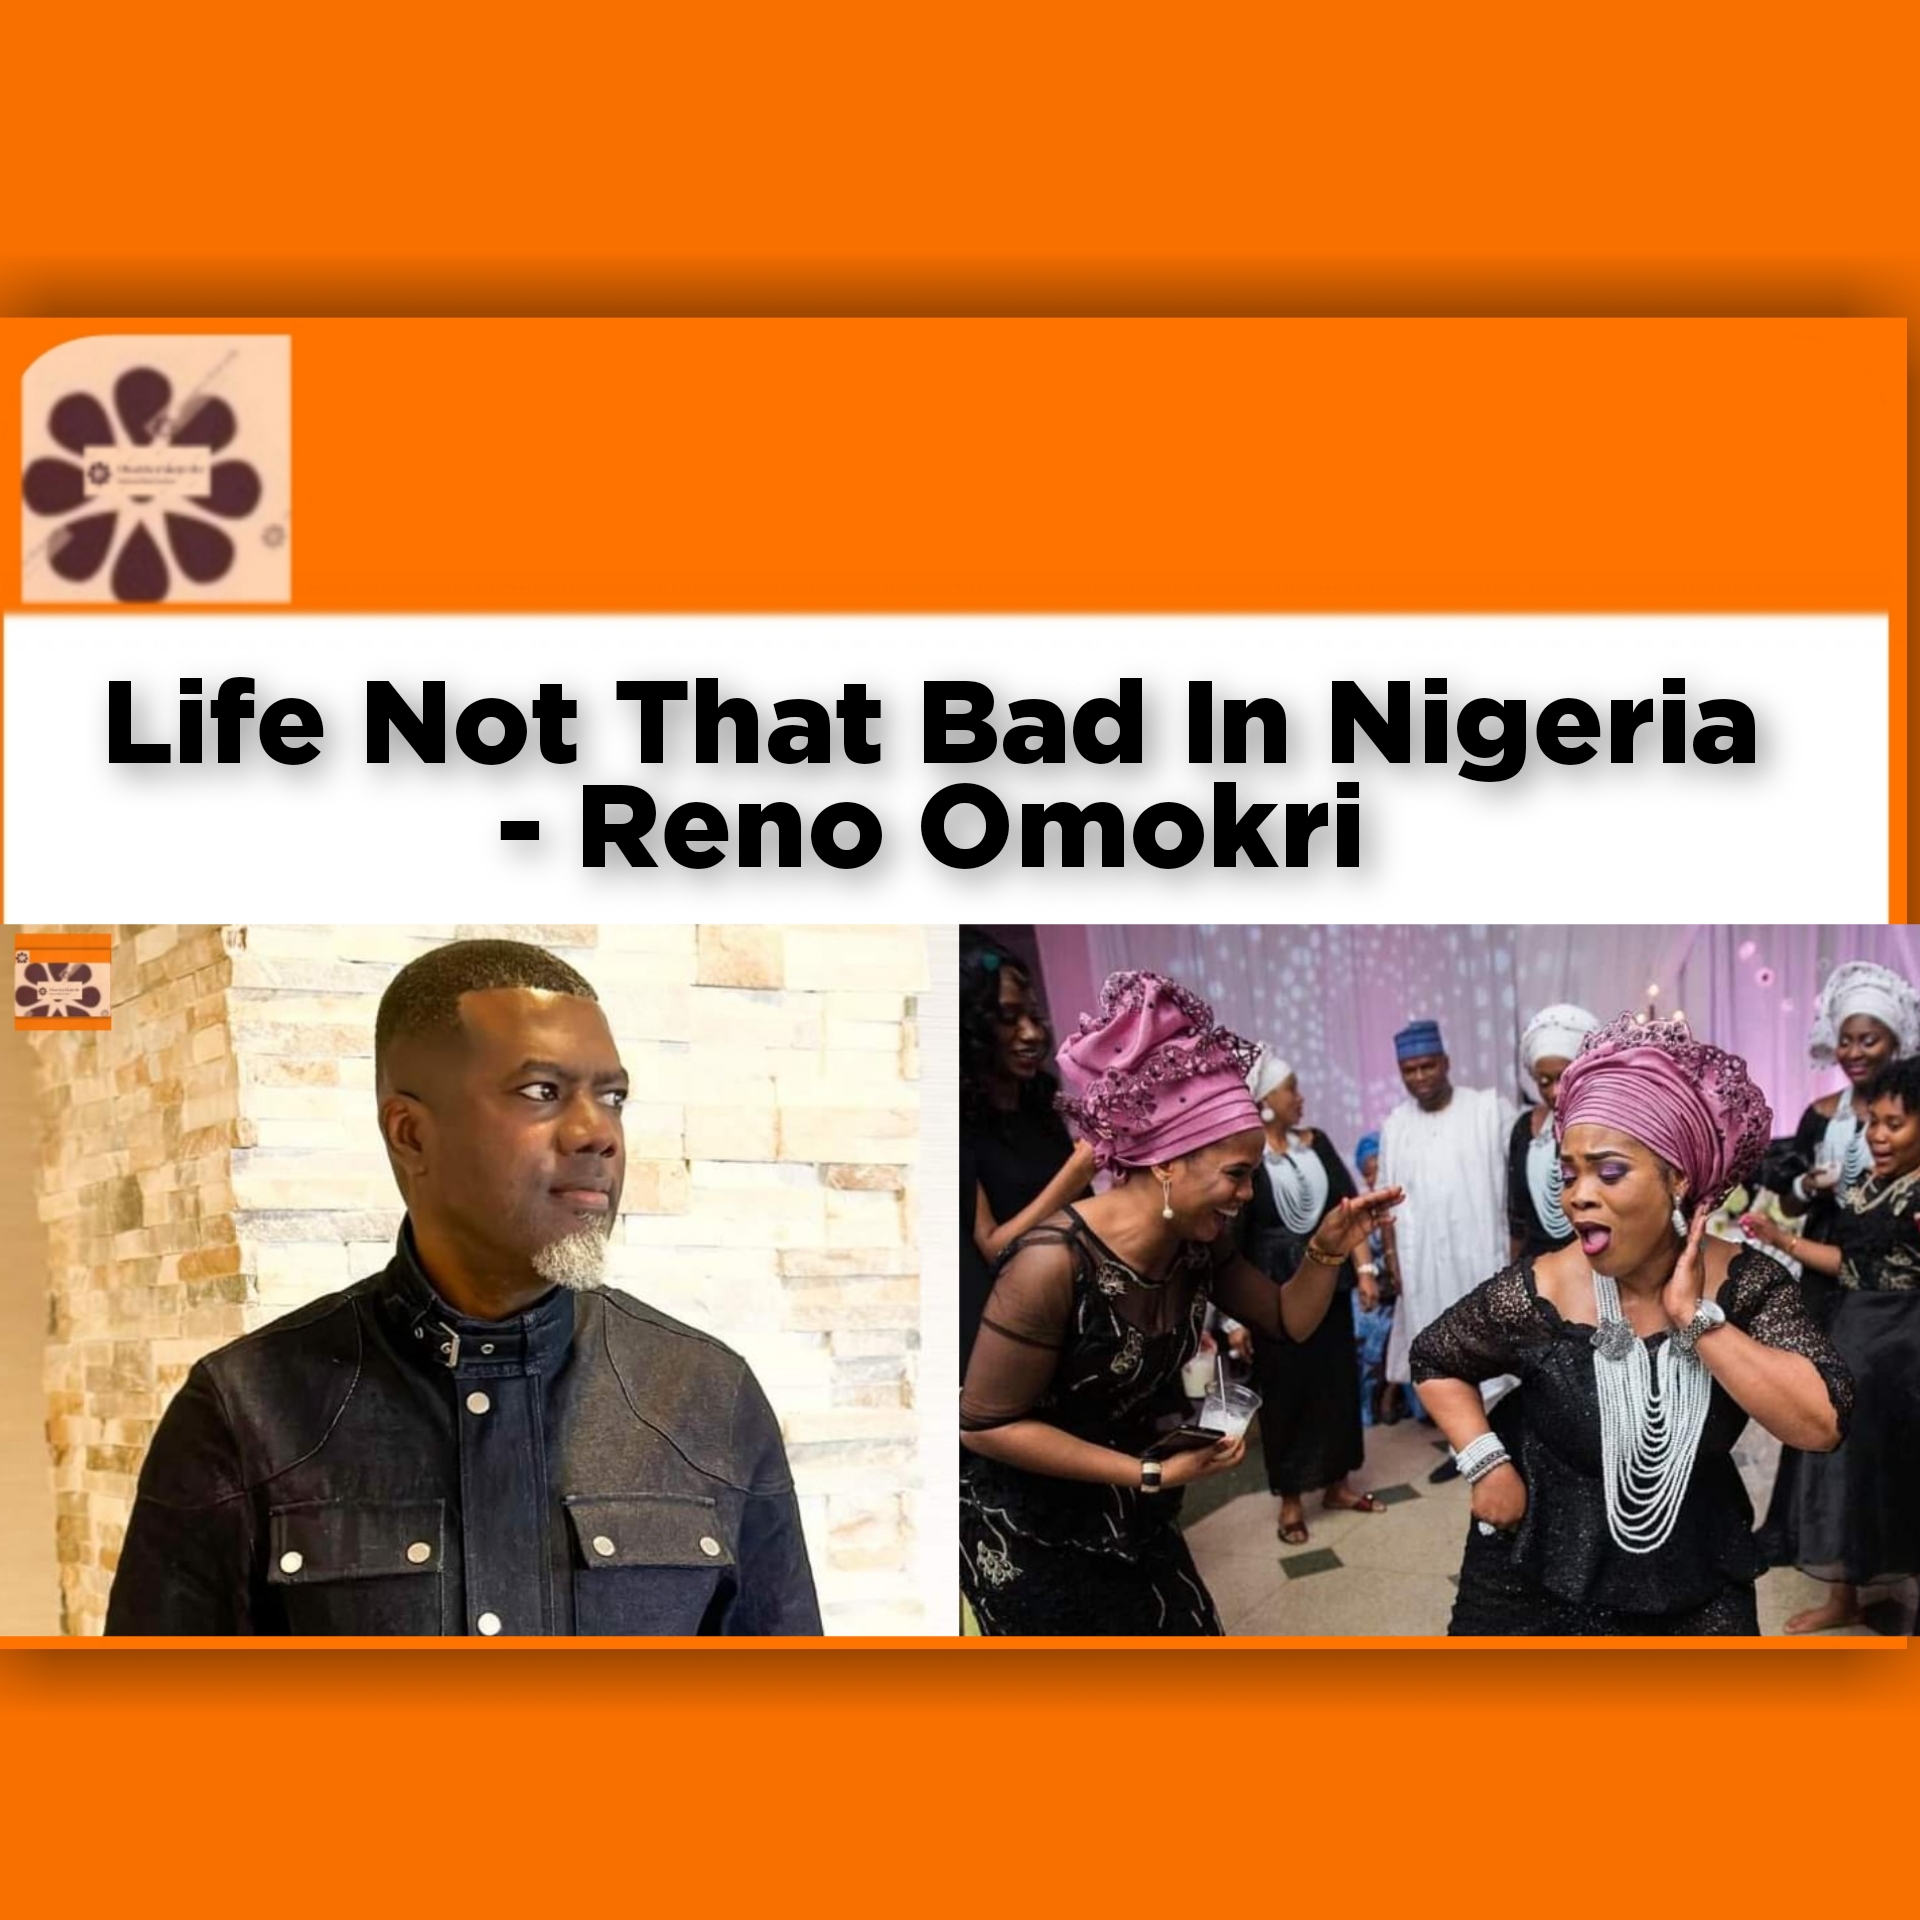 Life Not That Bad In Nigeria - Reno Omokri ~ OsazuwaAkonedo #Africa